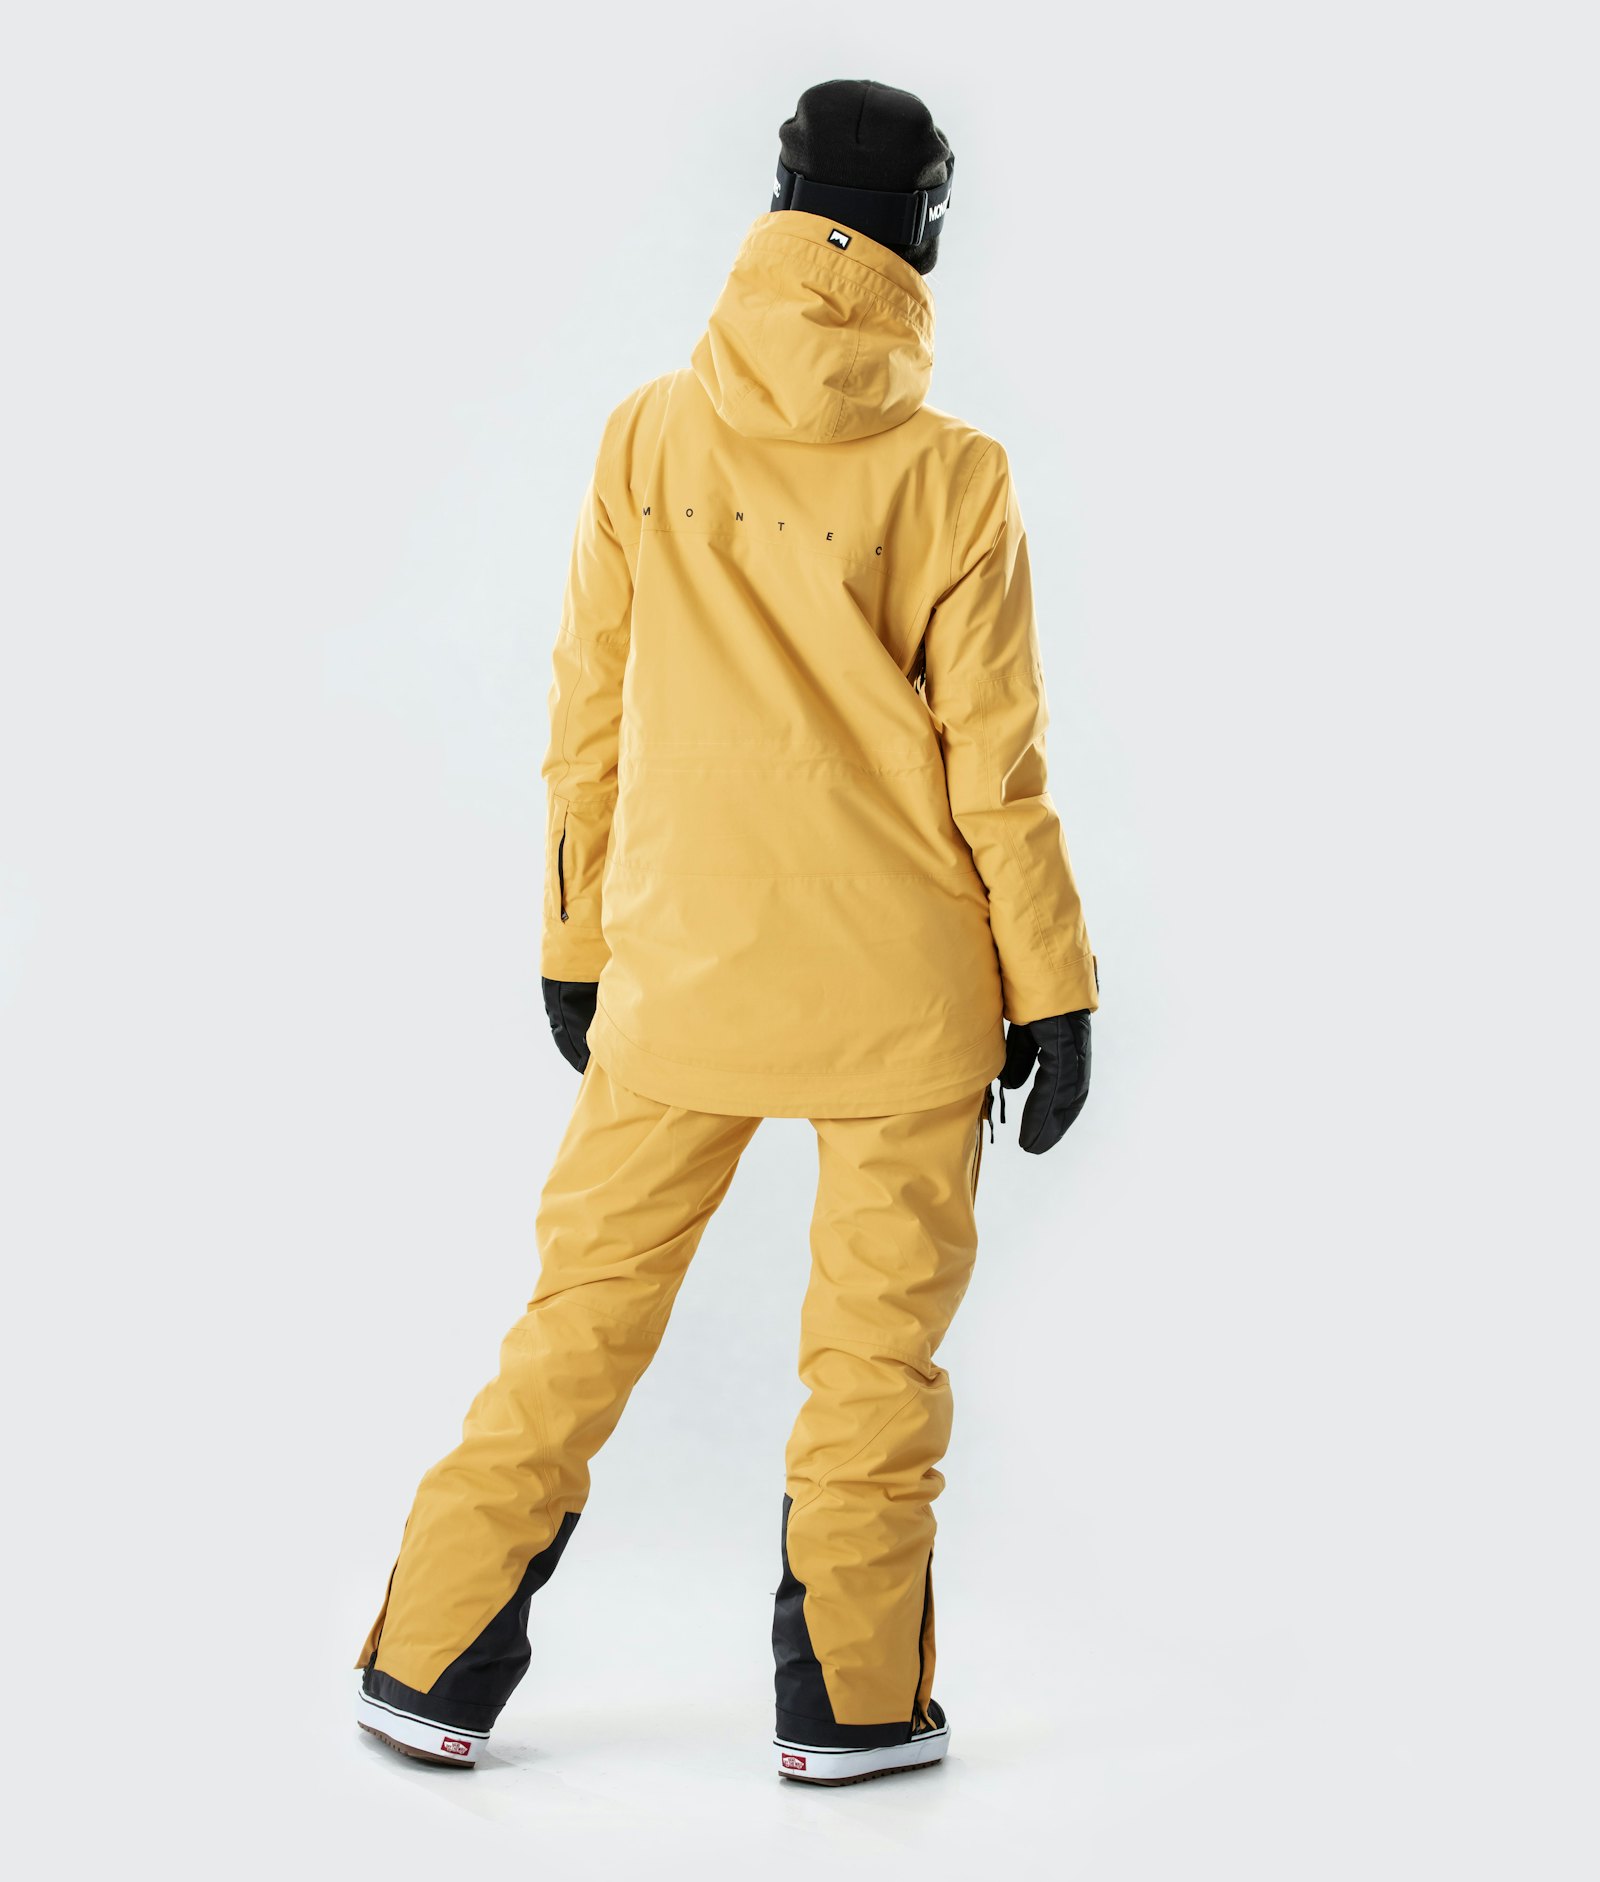 Roc W Snowboard Jacket Women Yellow